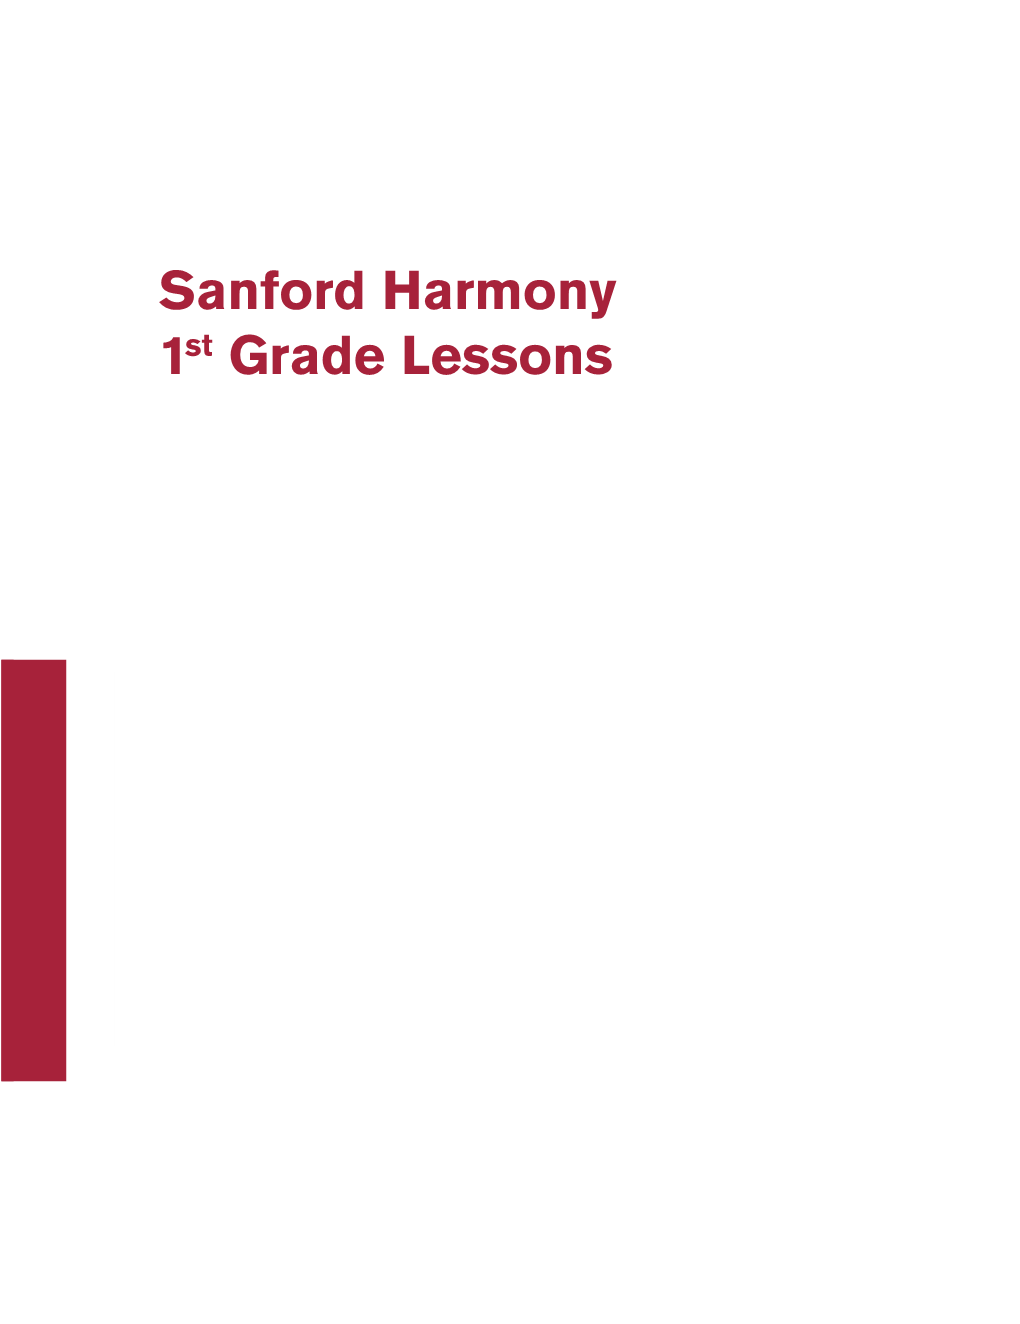 Sanford Harmony Program 1St Grade Lessons